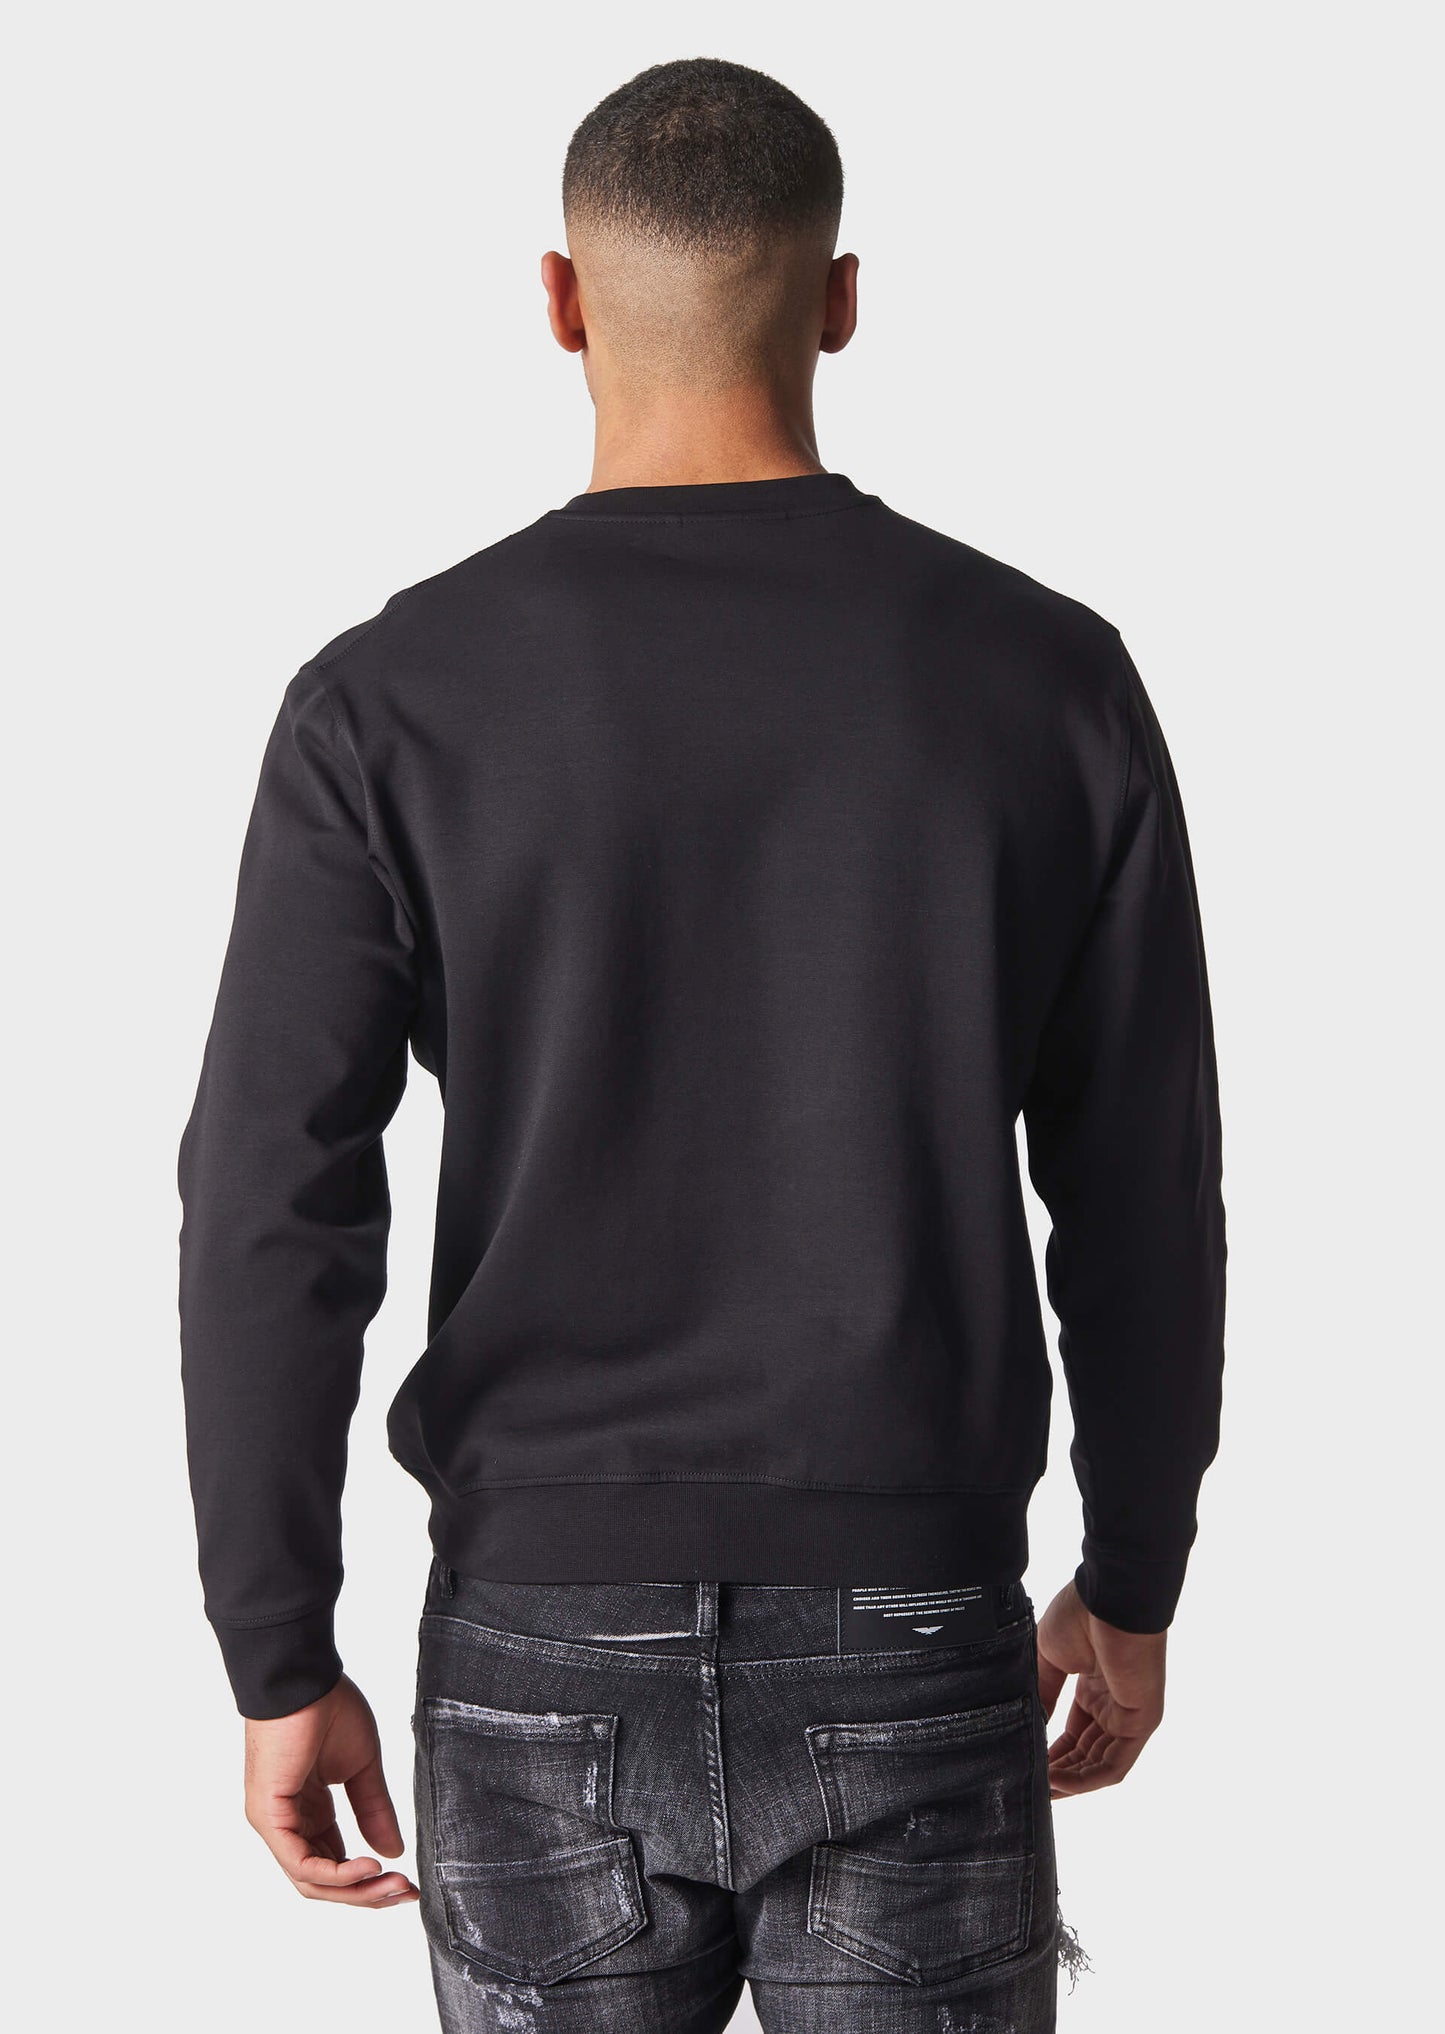 Aimer Black Sweatshirt